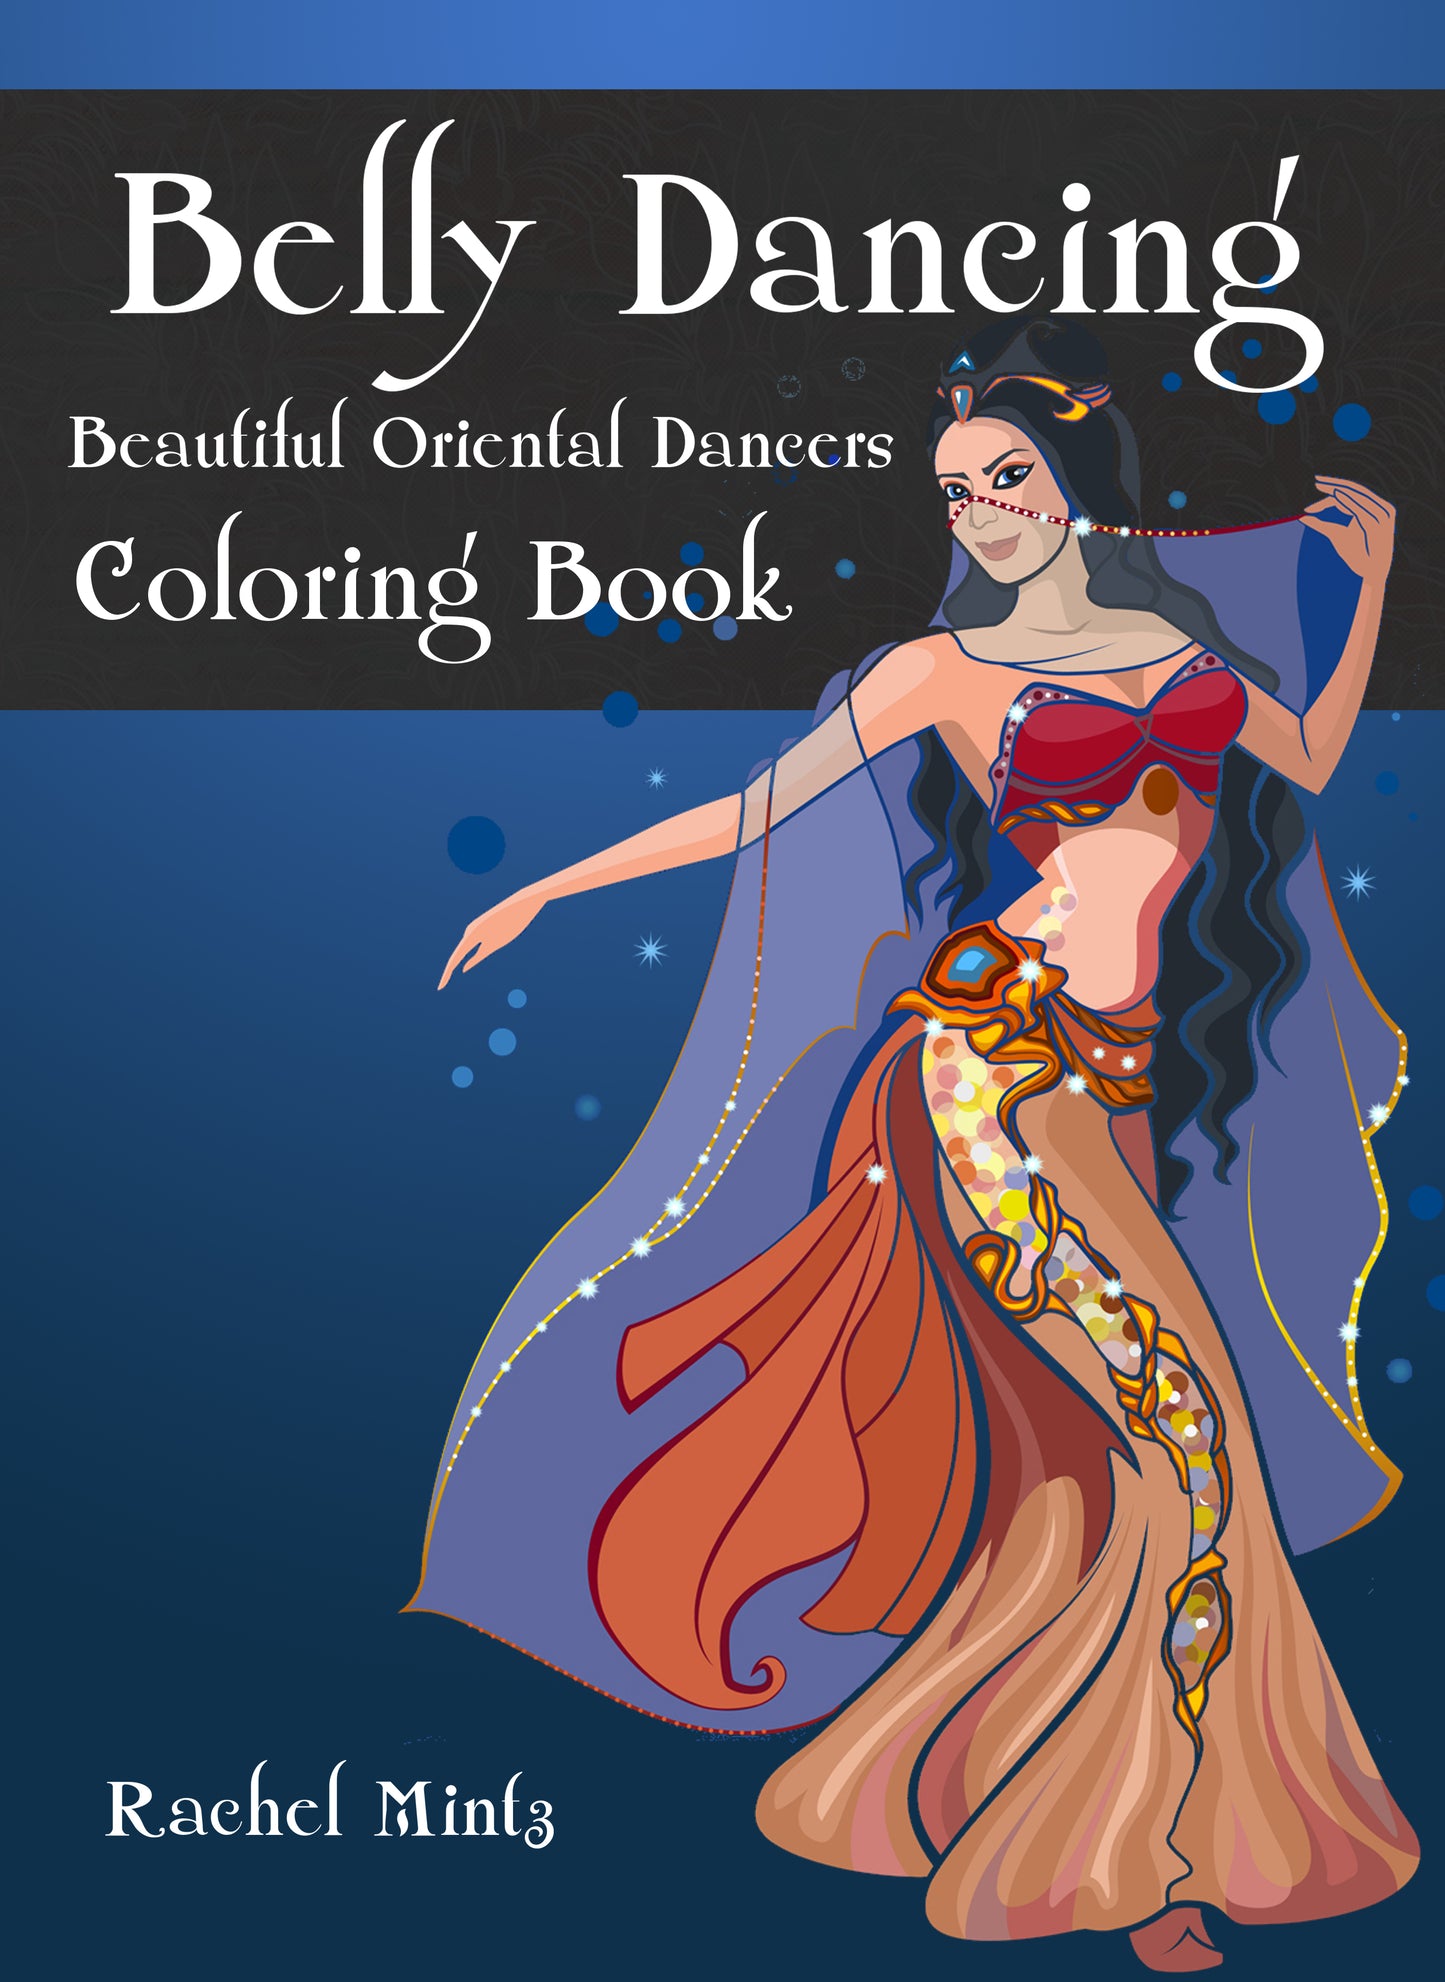 Belly Dancing - Beautiful Oriental Women Dancers Coloring Book Rachel Mintz